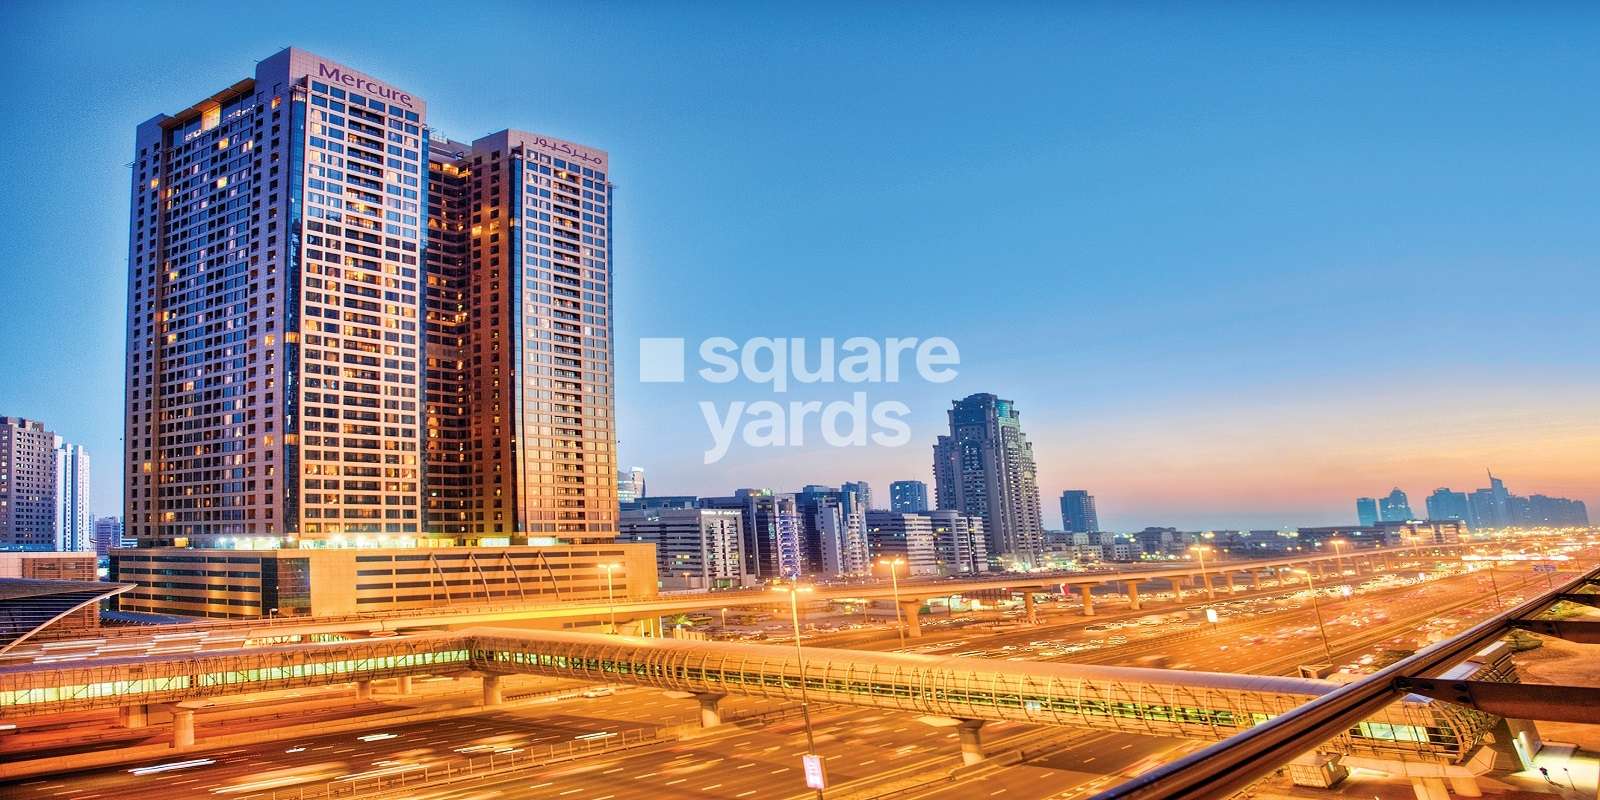 Mercure Dubai Hotel Apartments Cover Image